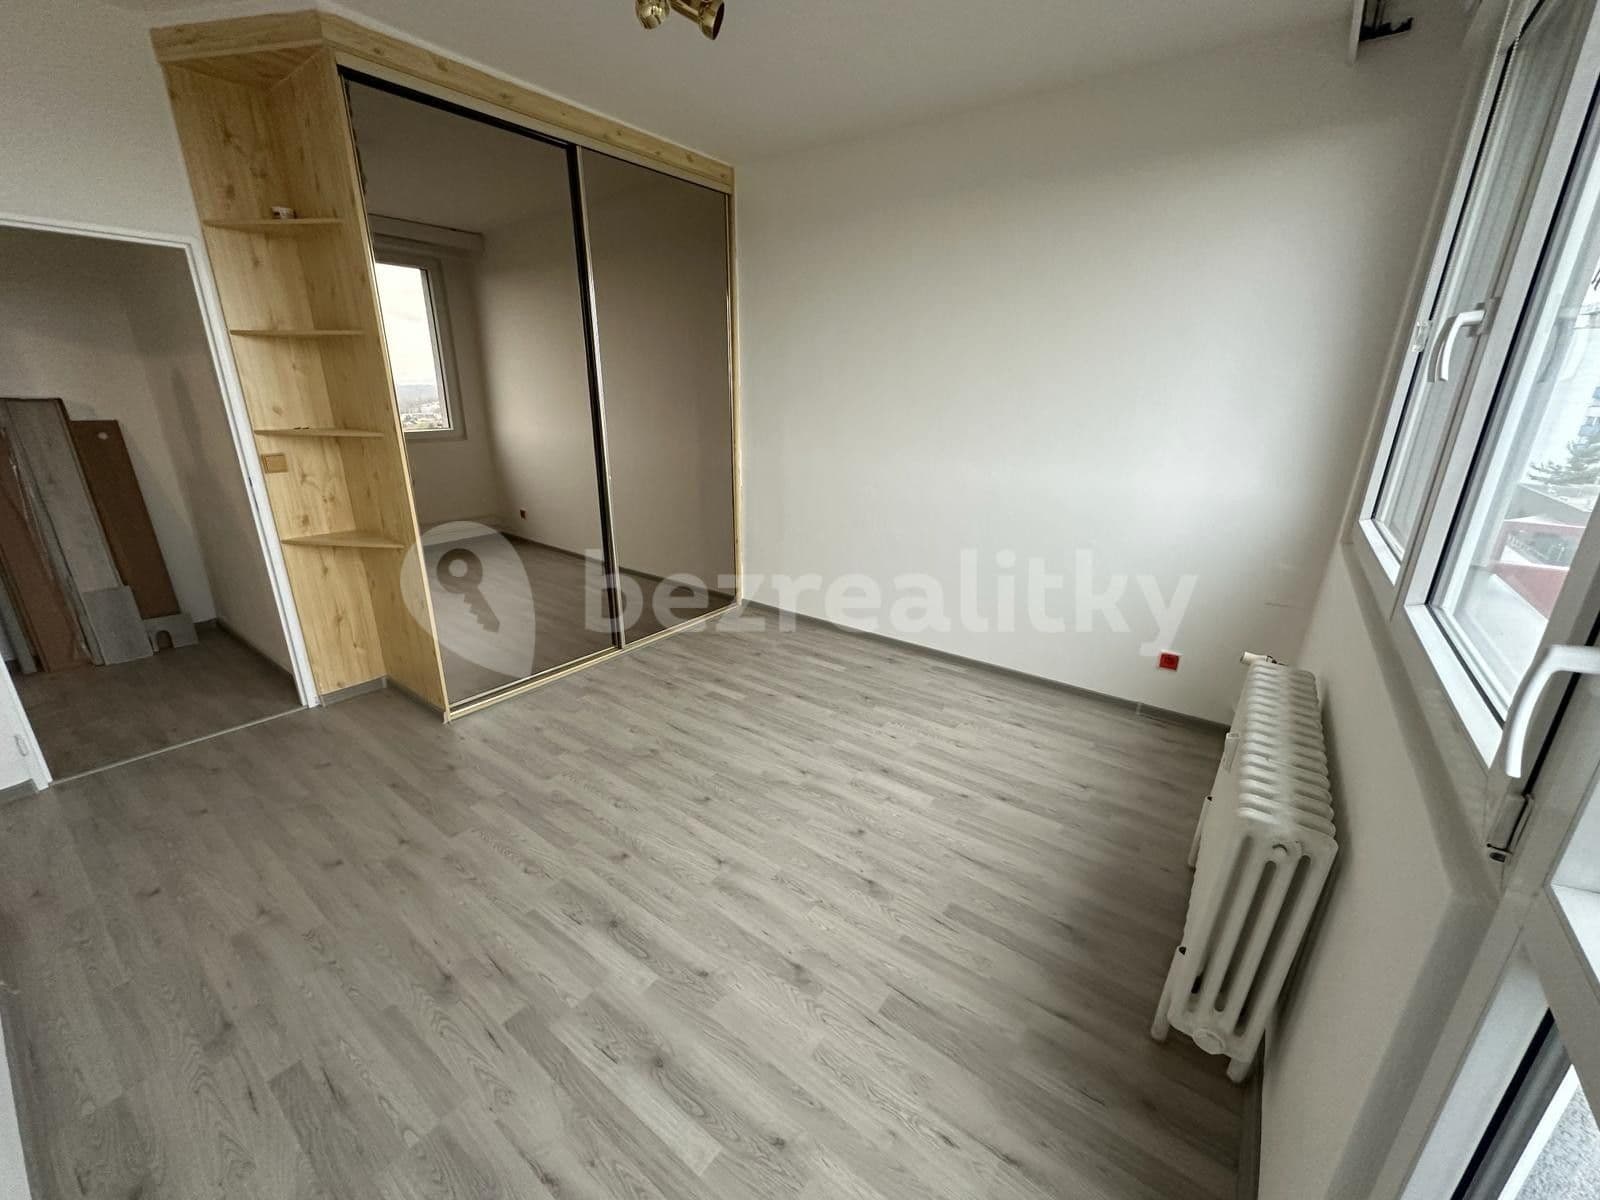 2 bedroom flat to rent, 53 m², Vietnamská, Ostrava, Moravskoslezský Region